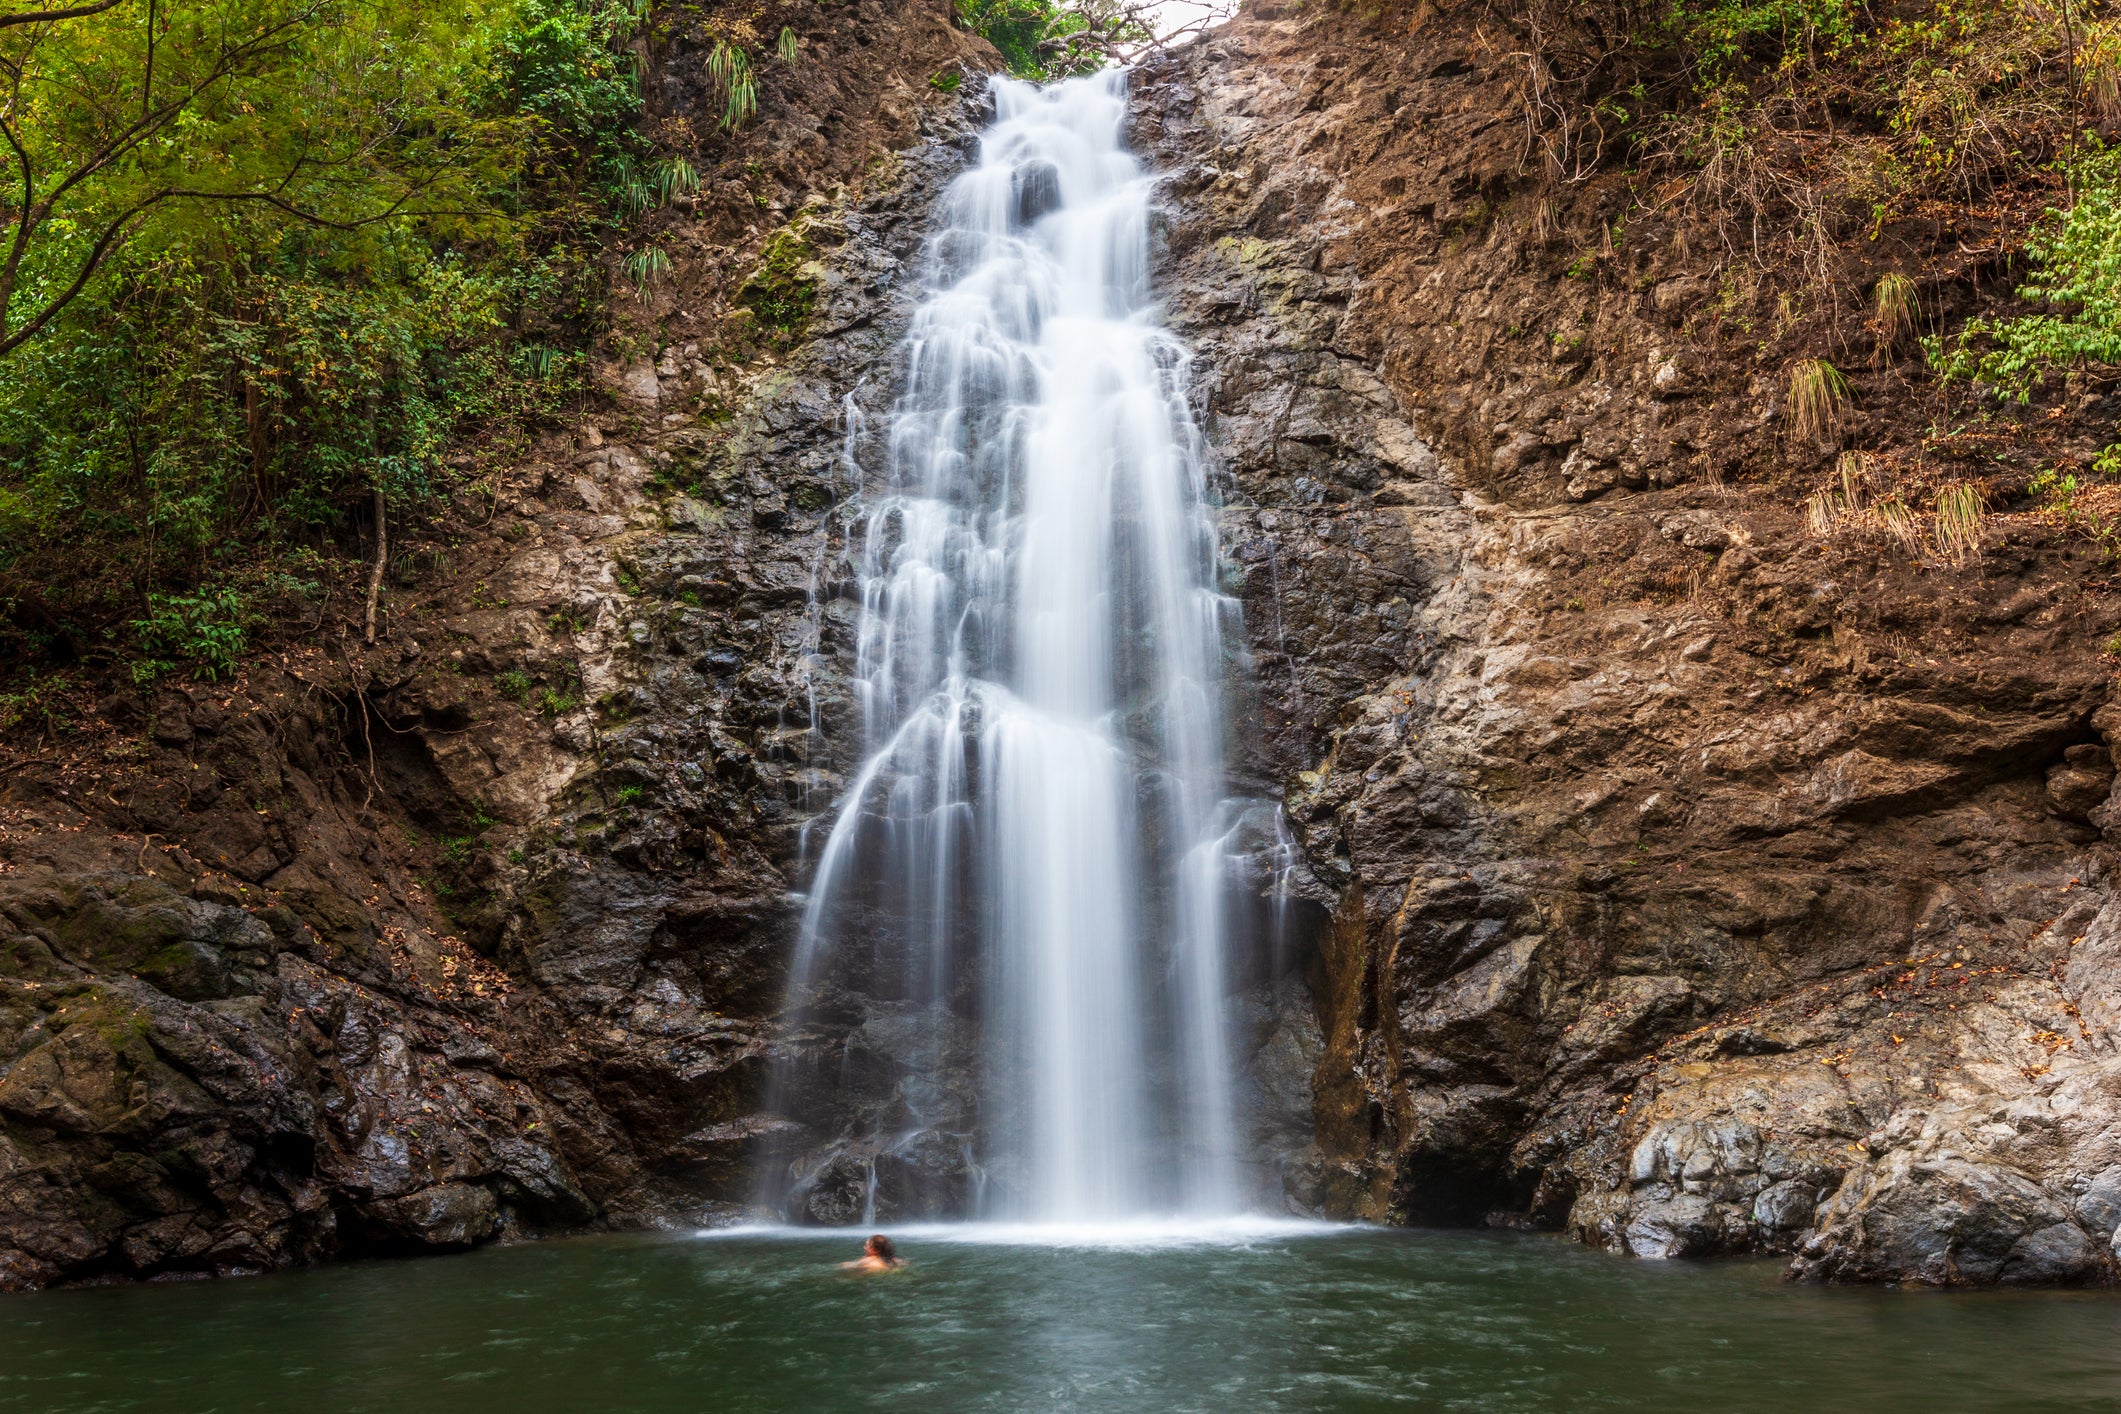 The Montezuma Waterfalls in Nicoya, Costa Rica